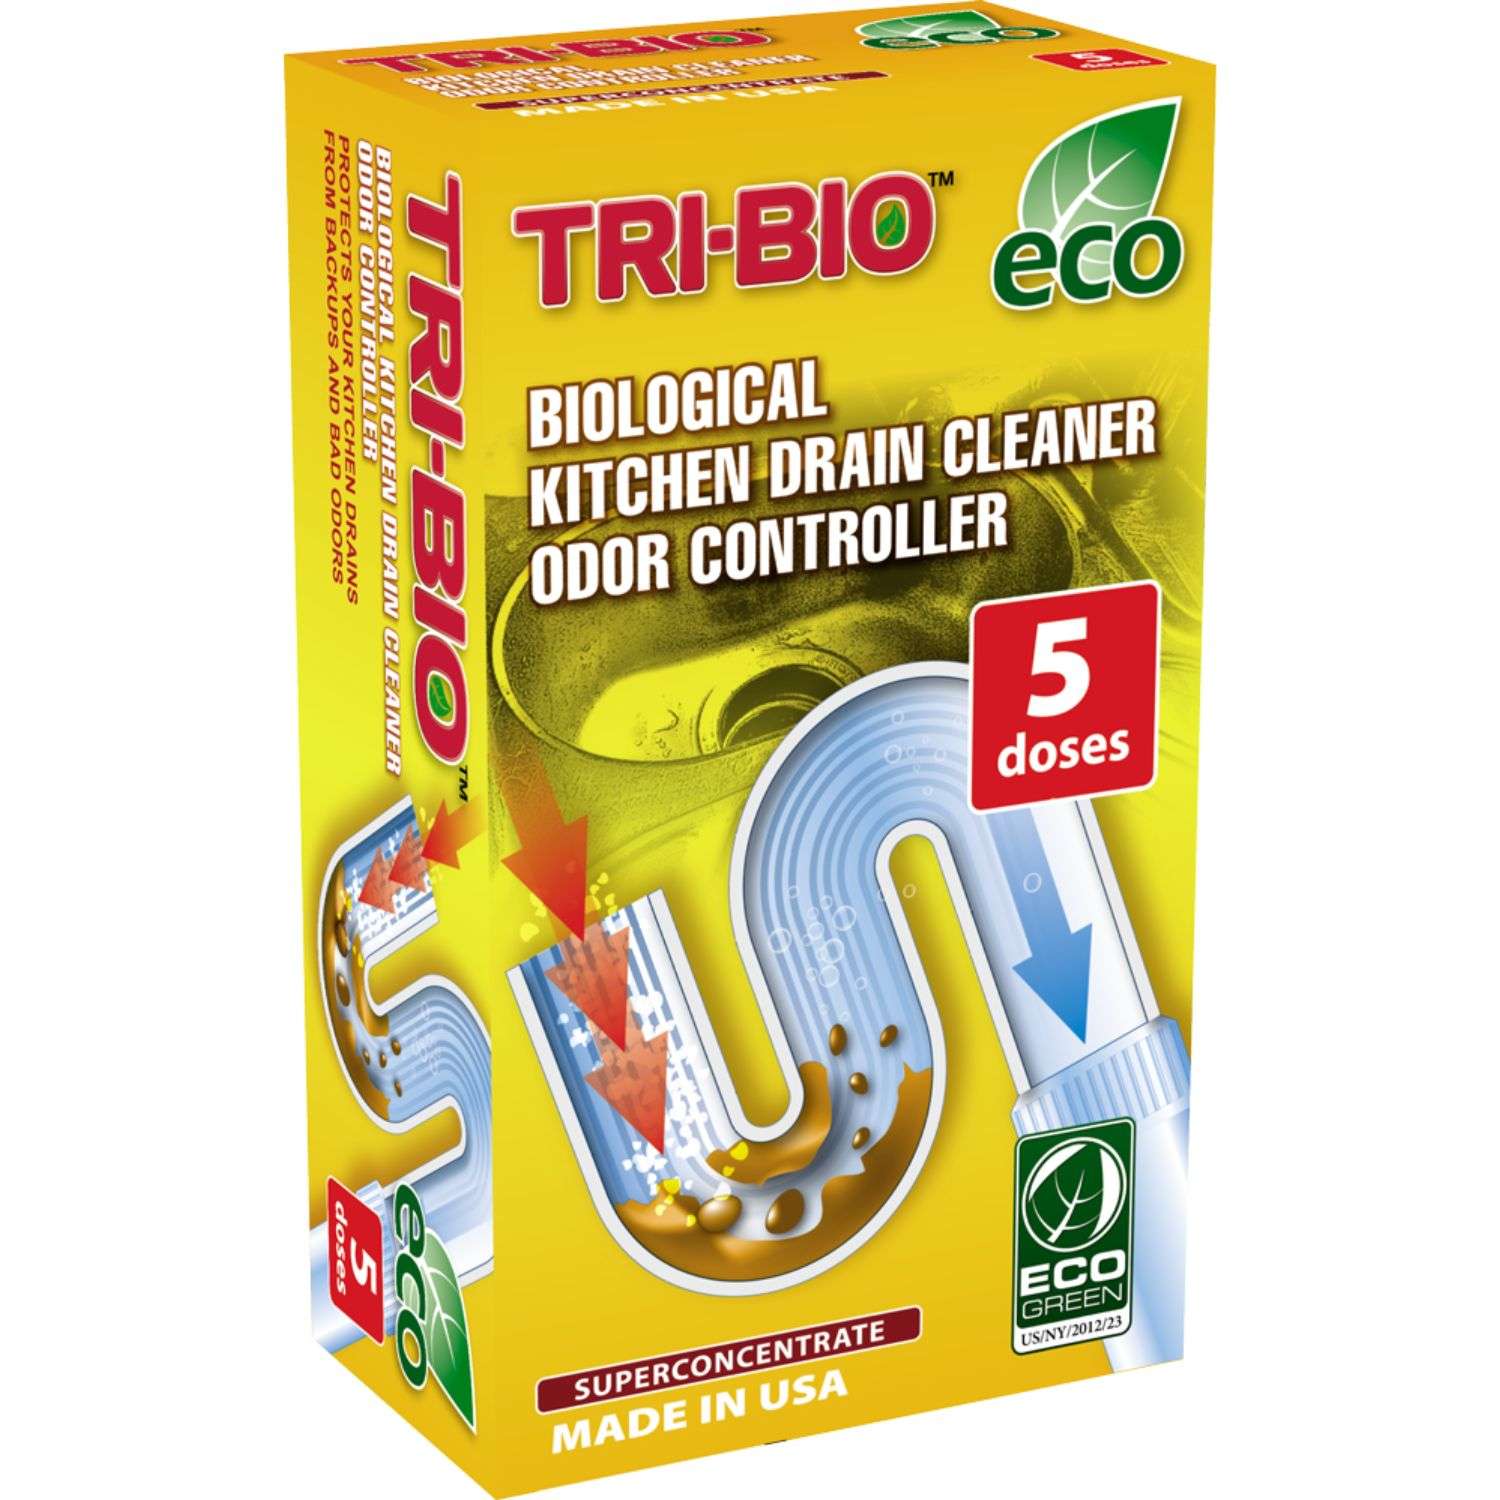 Порошок для прочистки труб TRI-BIO кухонных с контролем запаха. Суперконцентрат 5 доз - фото 1